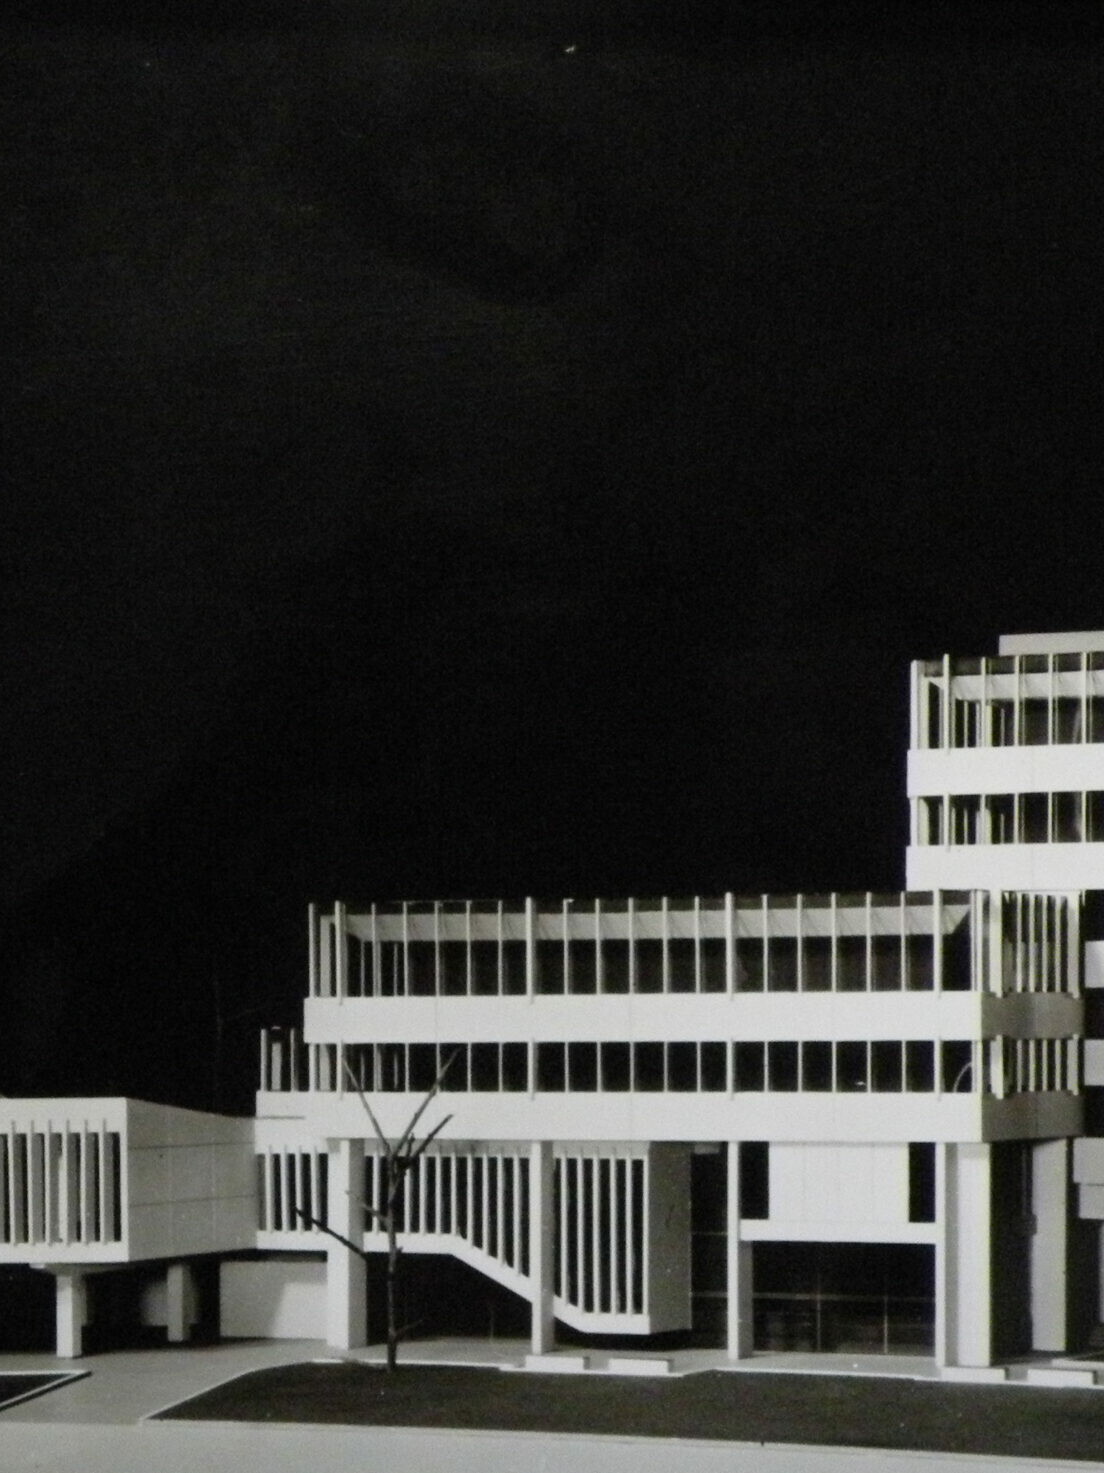 Rathaus Greven (1971-73, Dieter Oesterlen), Modell - Foto: Stefan Rethfeld